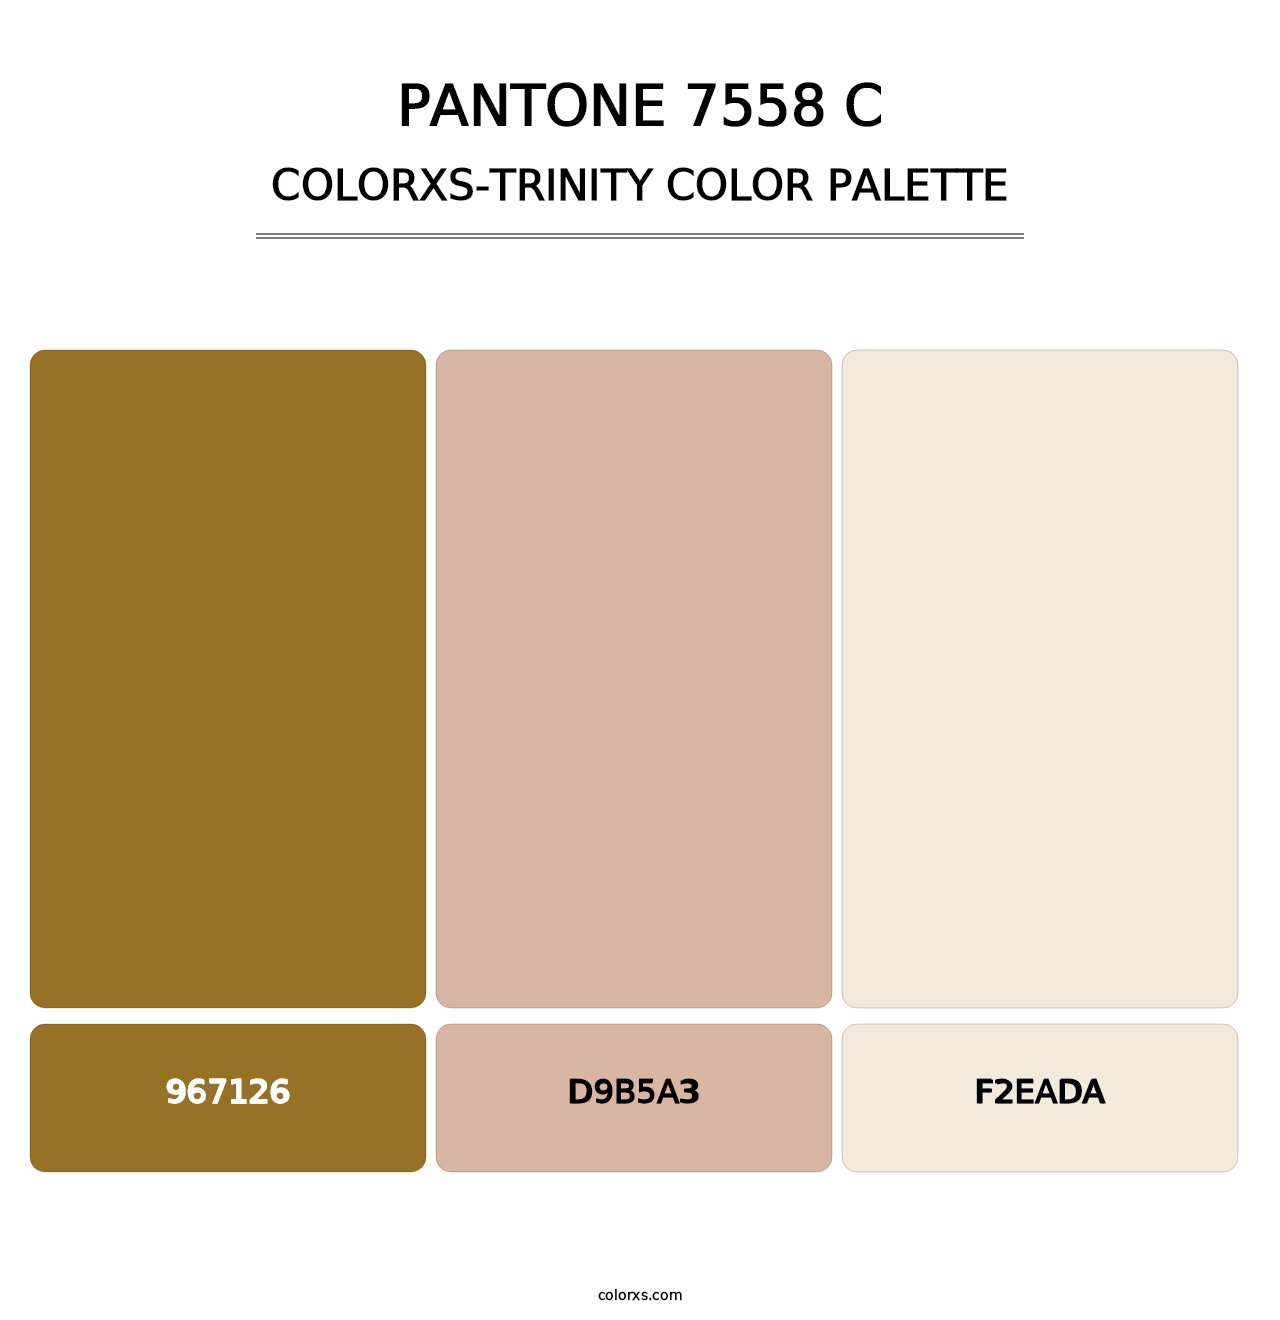 PANTONE 7558 C - Colorxs Trinity Palette